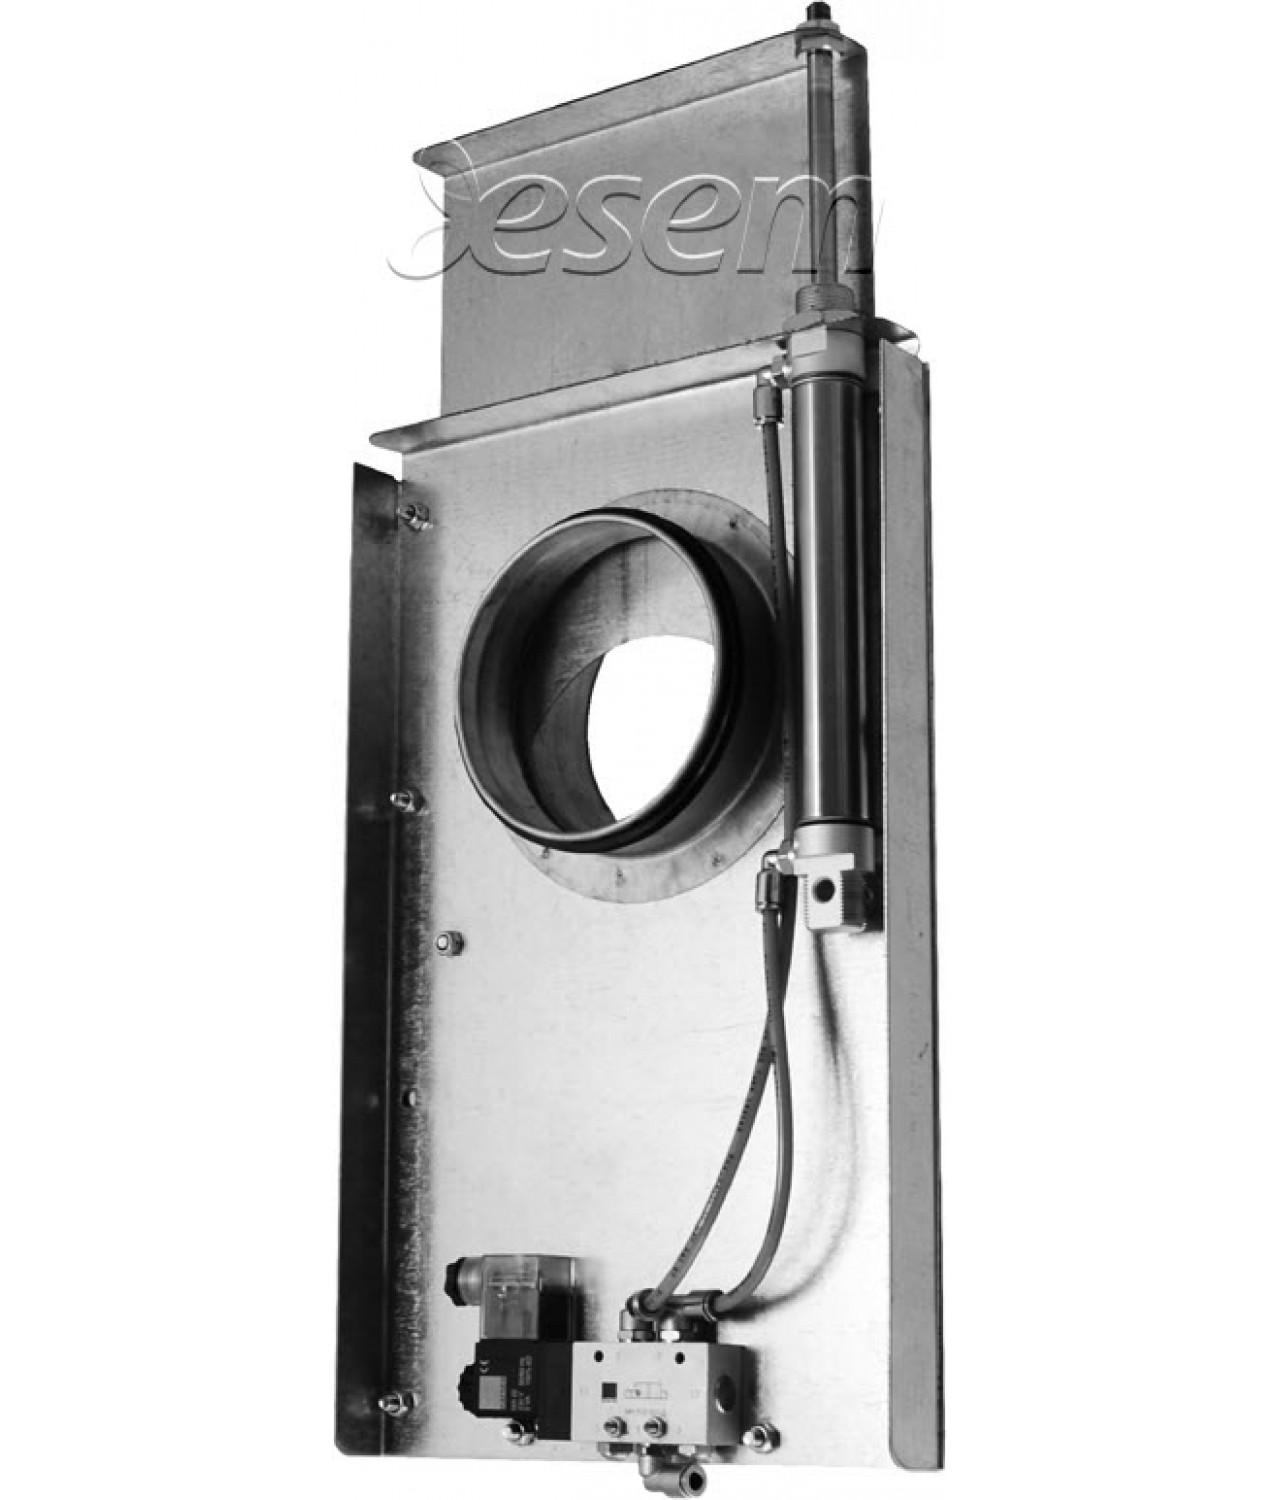 RSKI-E - with electric pneumatic valve